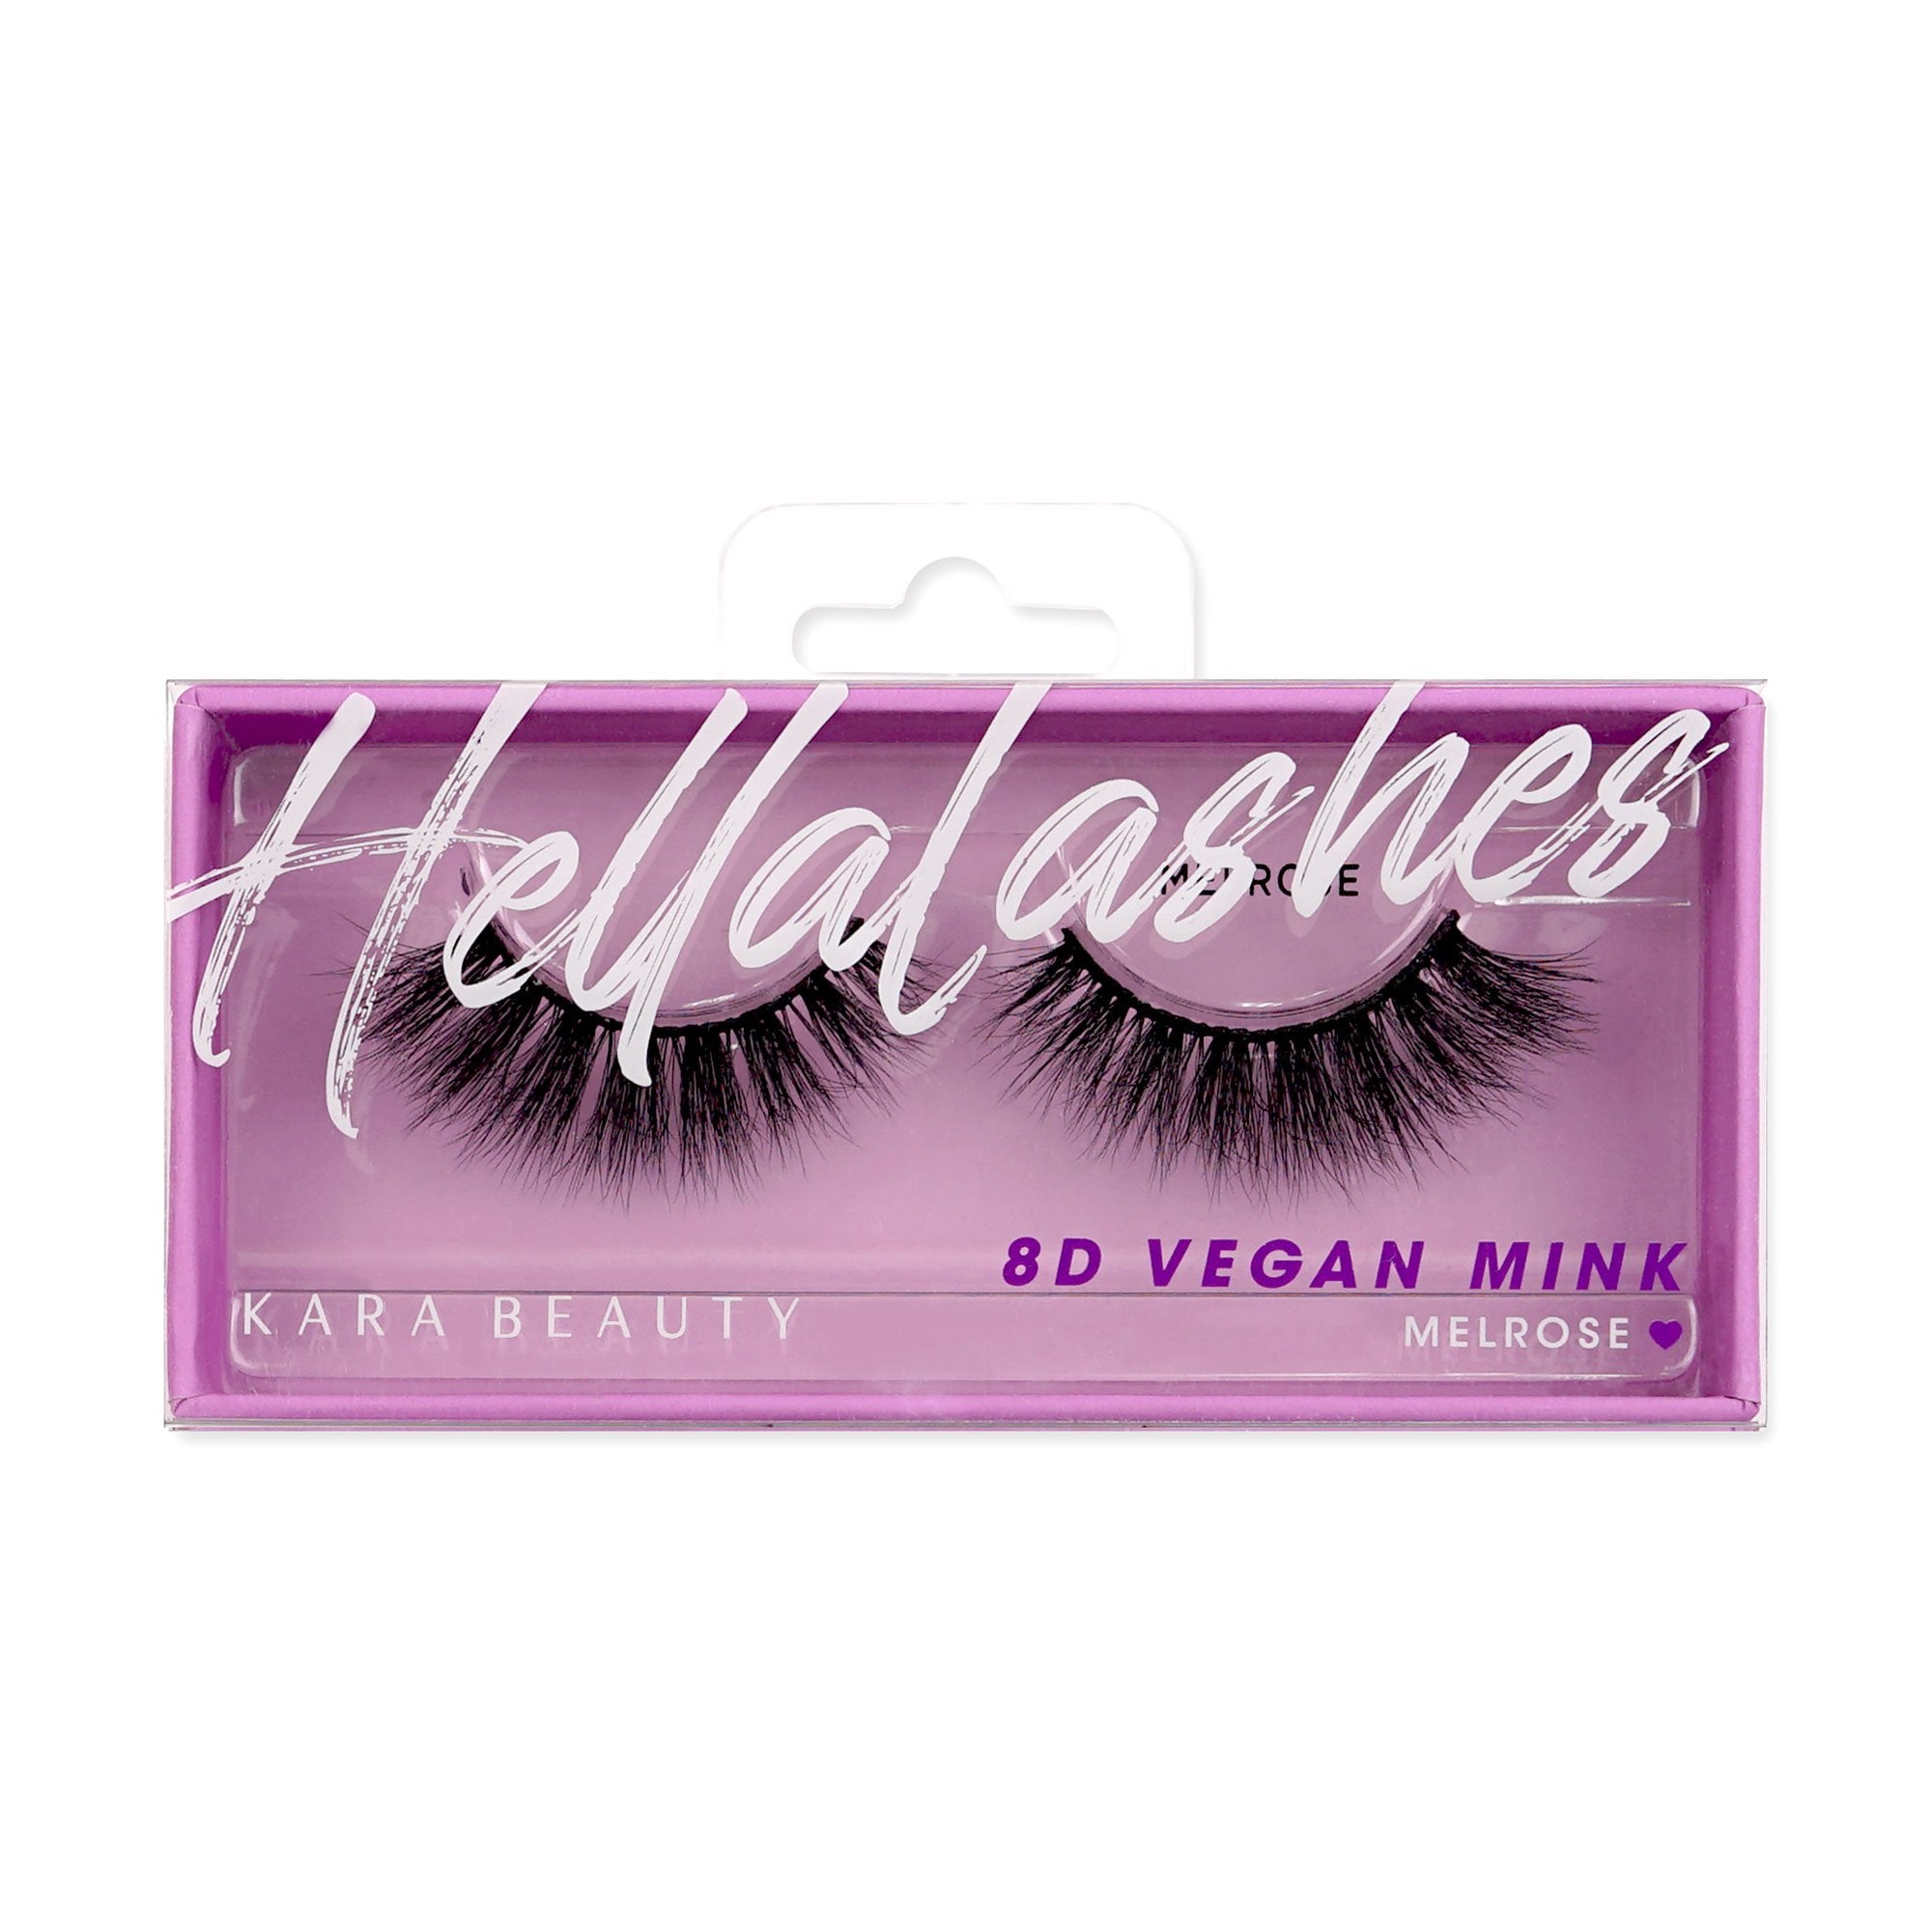 MELROSE- HELLALASHES 8D Vegan Mink